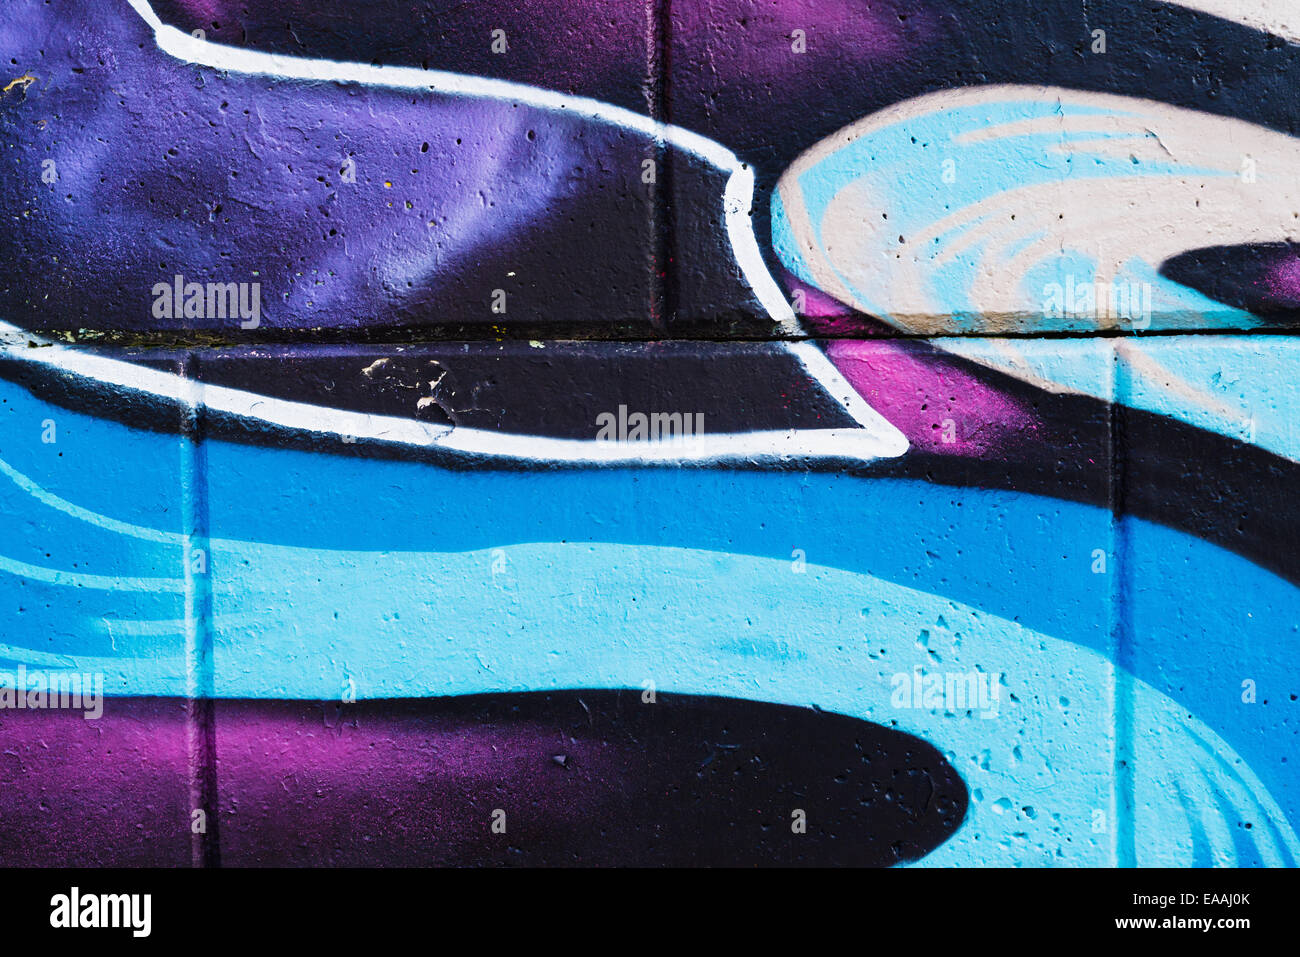 Arte de la calle graffiti, vibrante detalle multicolor de arte de graffiti en la pared. Foto de stock